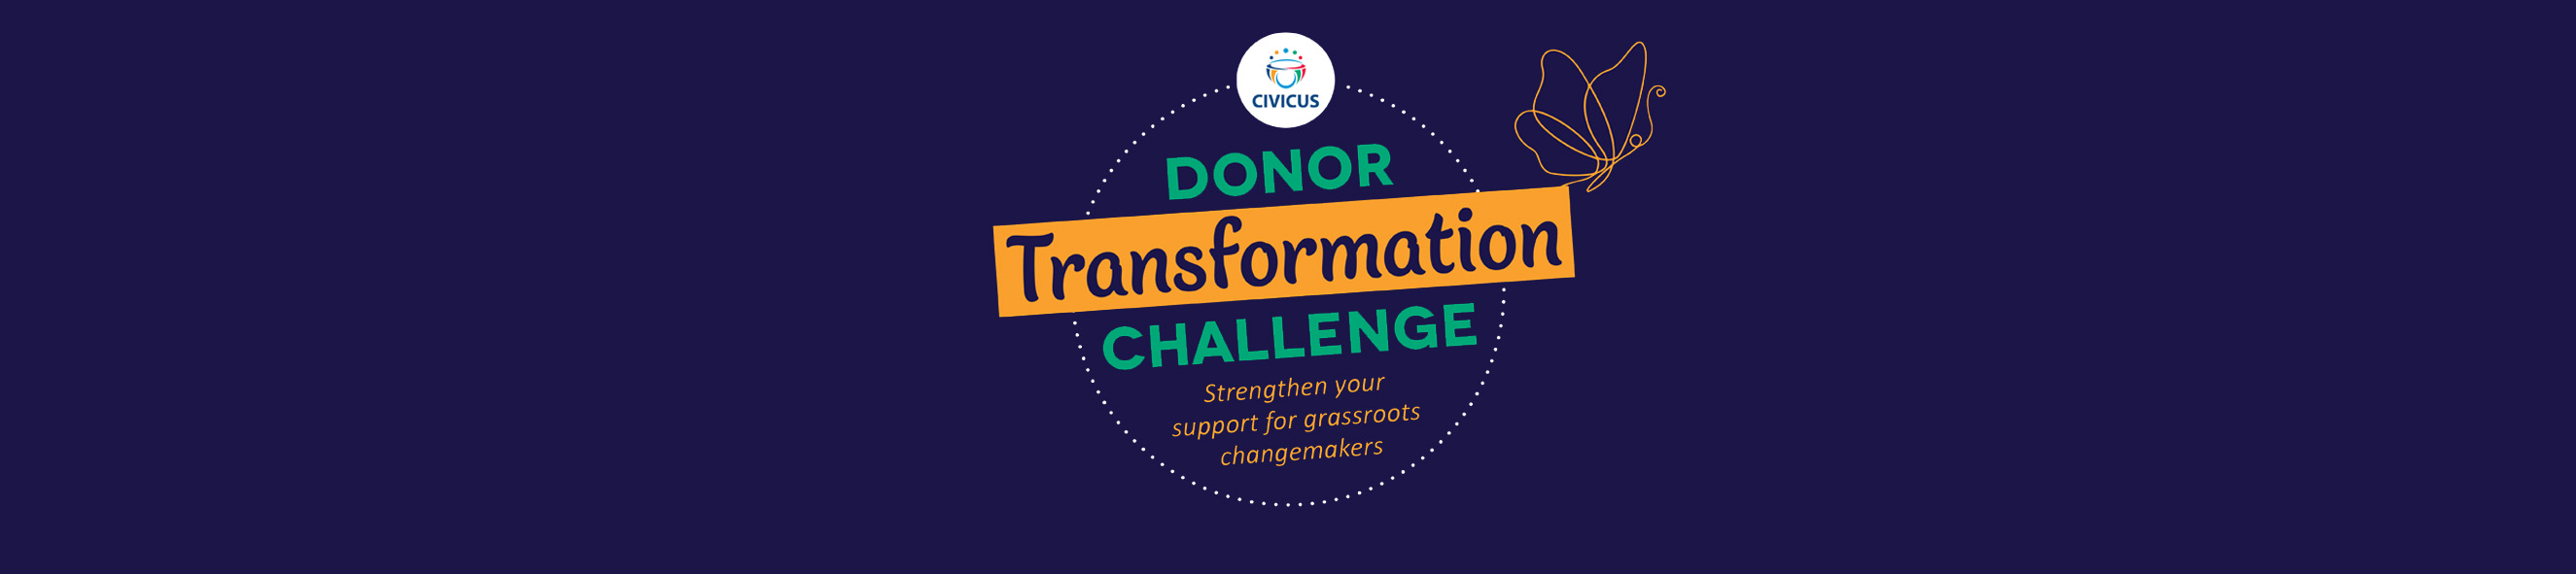 Donor Transformation Challenge